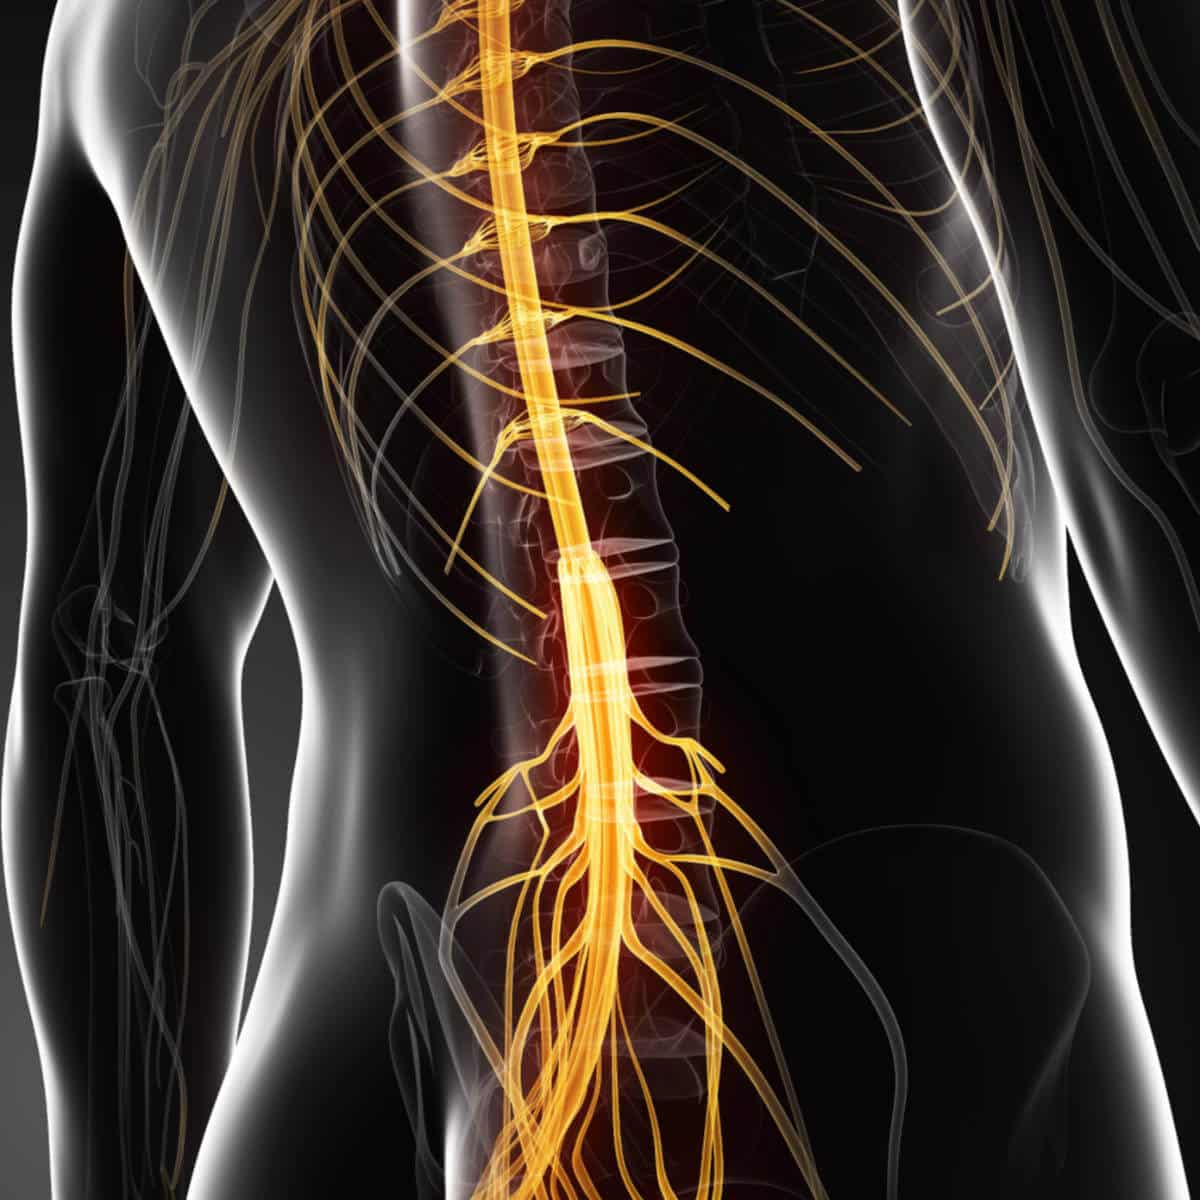 Pinched Nerve, Nerve compression: Symptoms Treatment